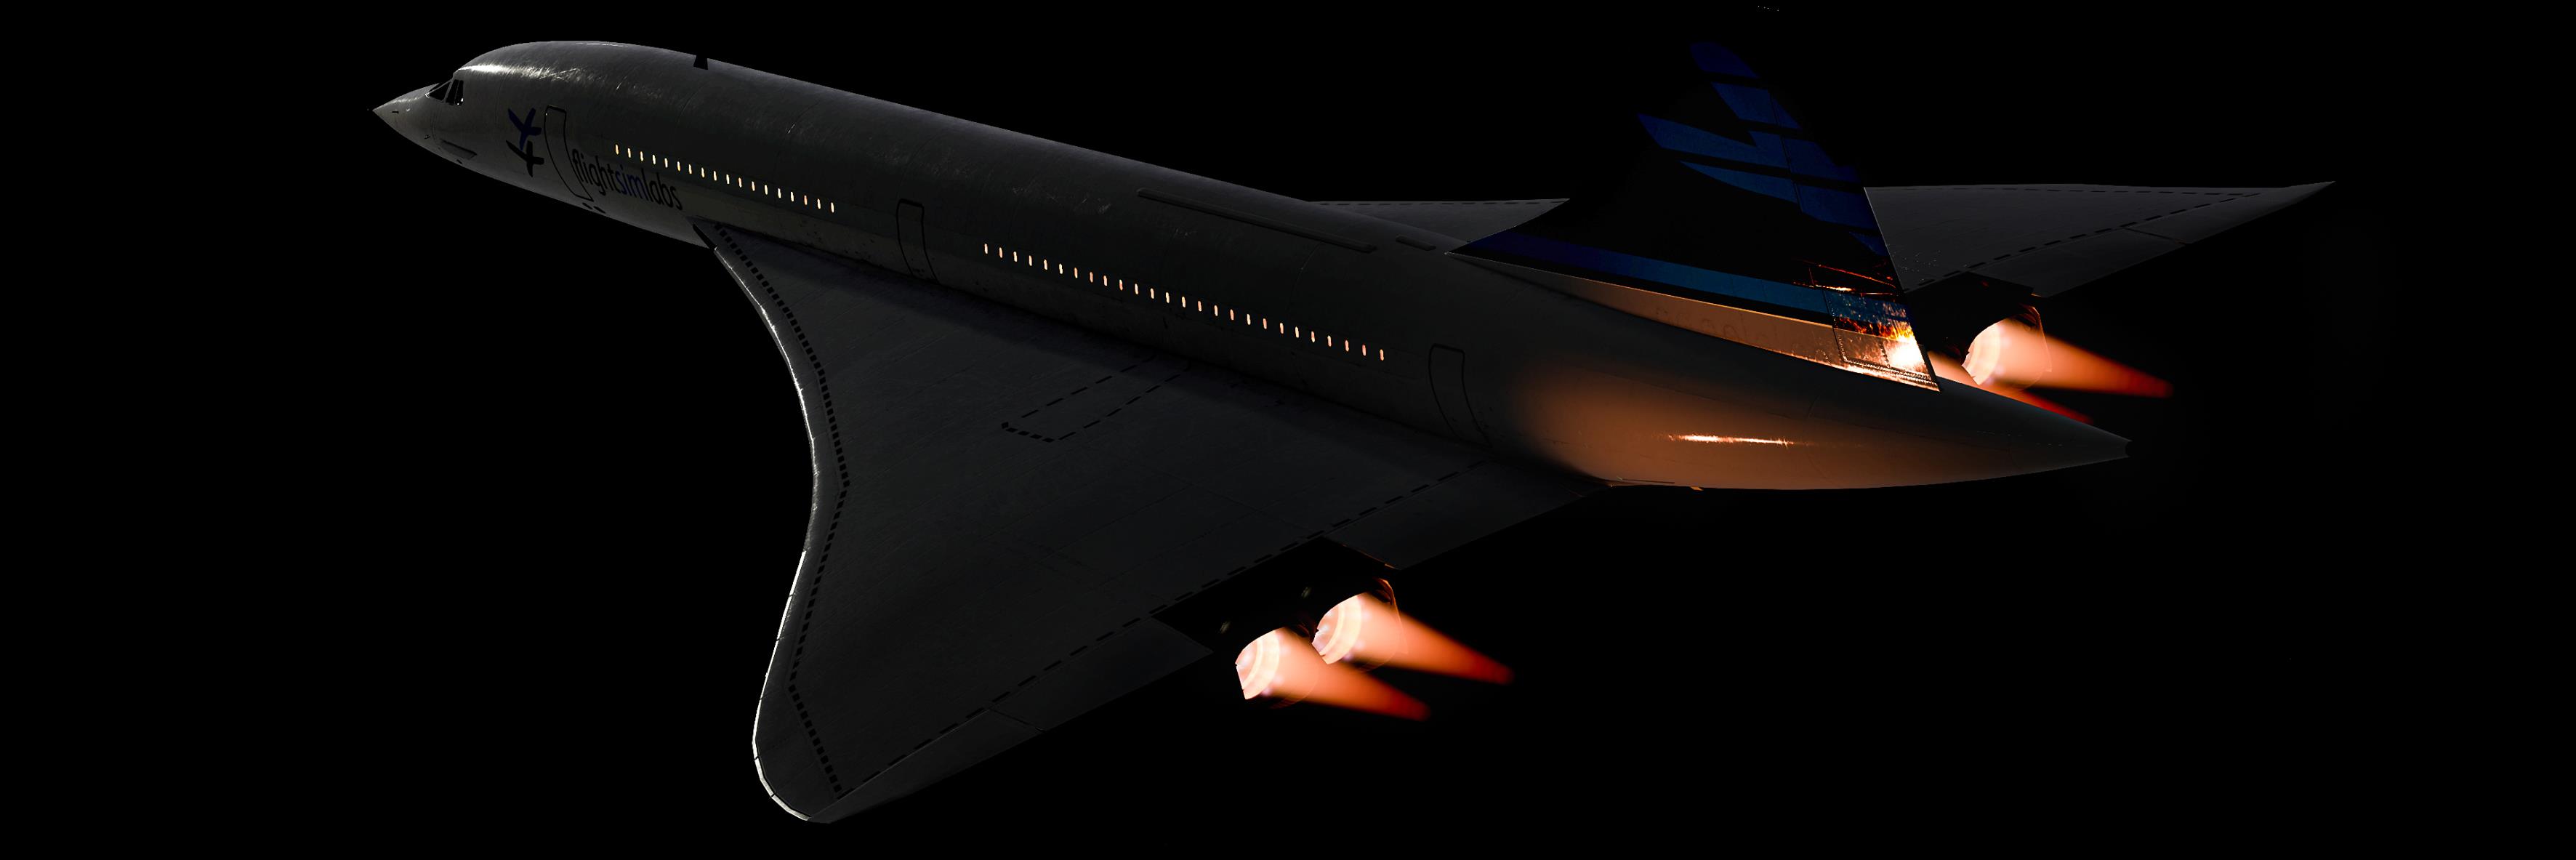 FlightSimLabs Teases Concorde With New Render